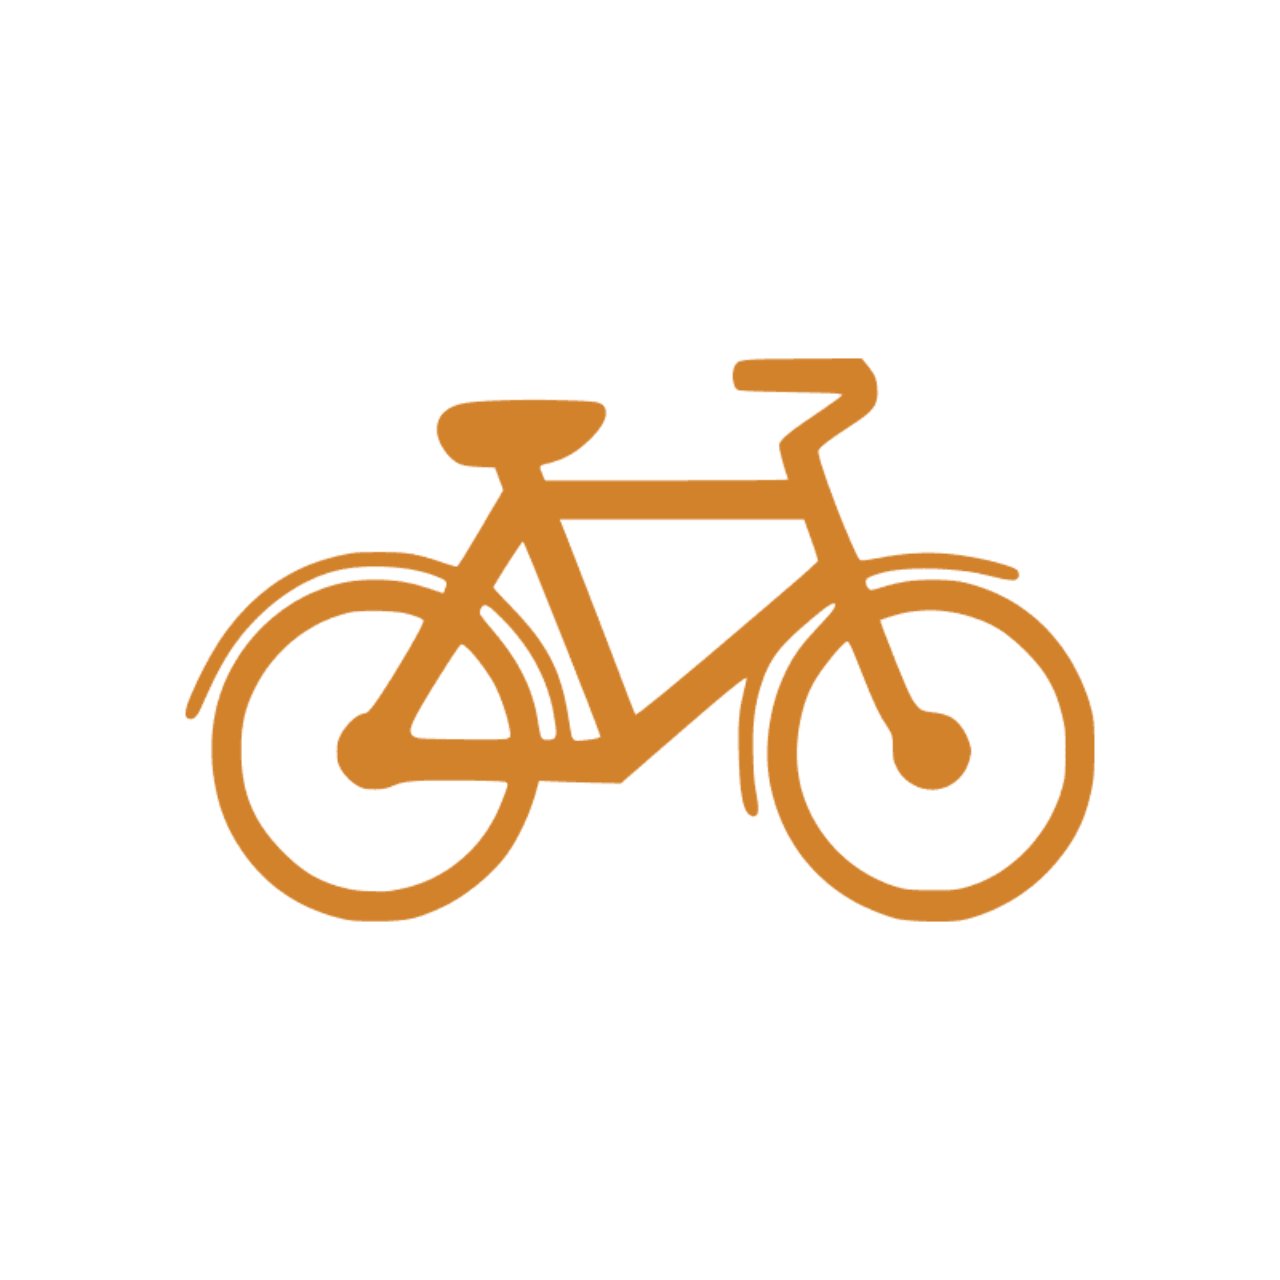 Orange line art of a bike